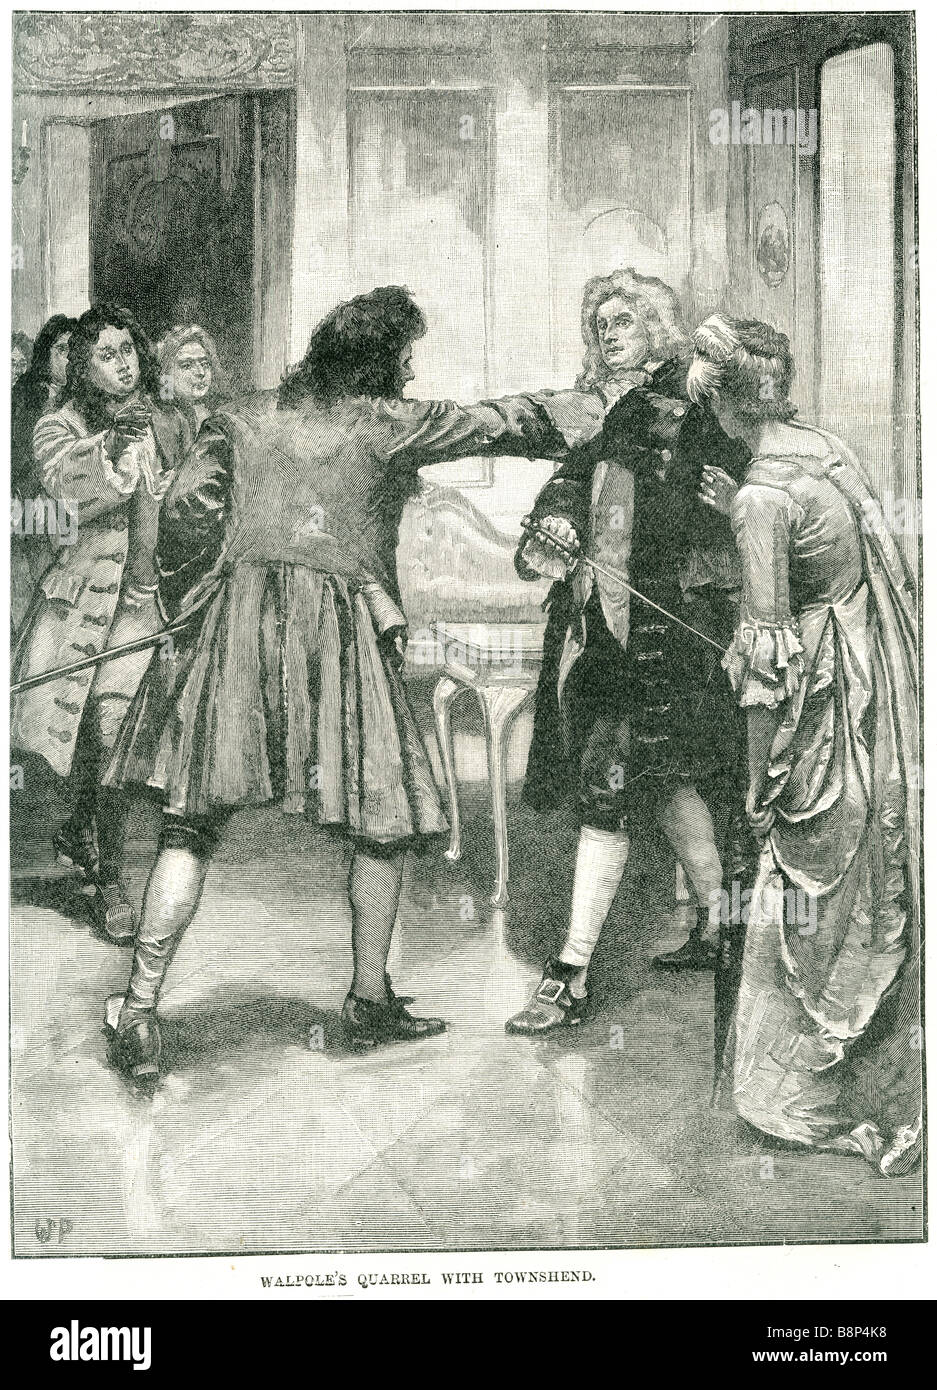 walpole's quarrel with townshend  Robert Walpole 1st Earl of Orford Stock Photo